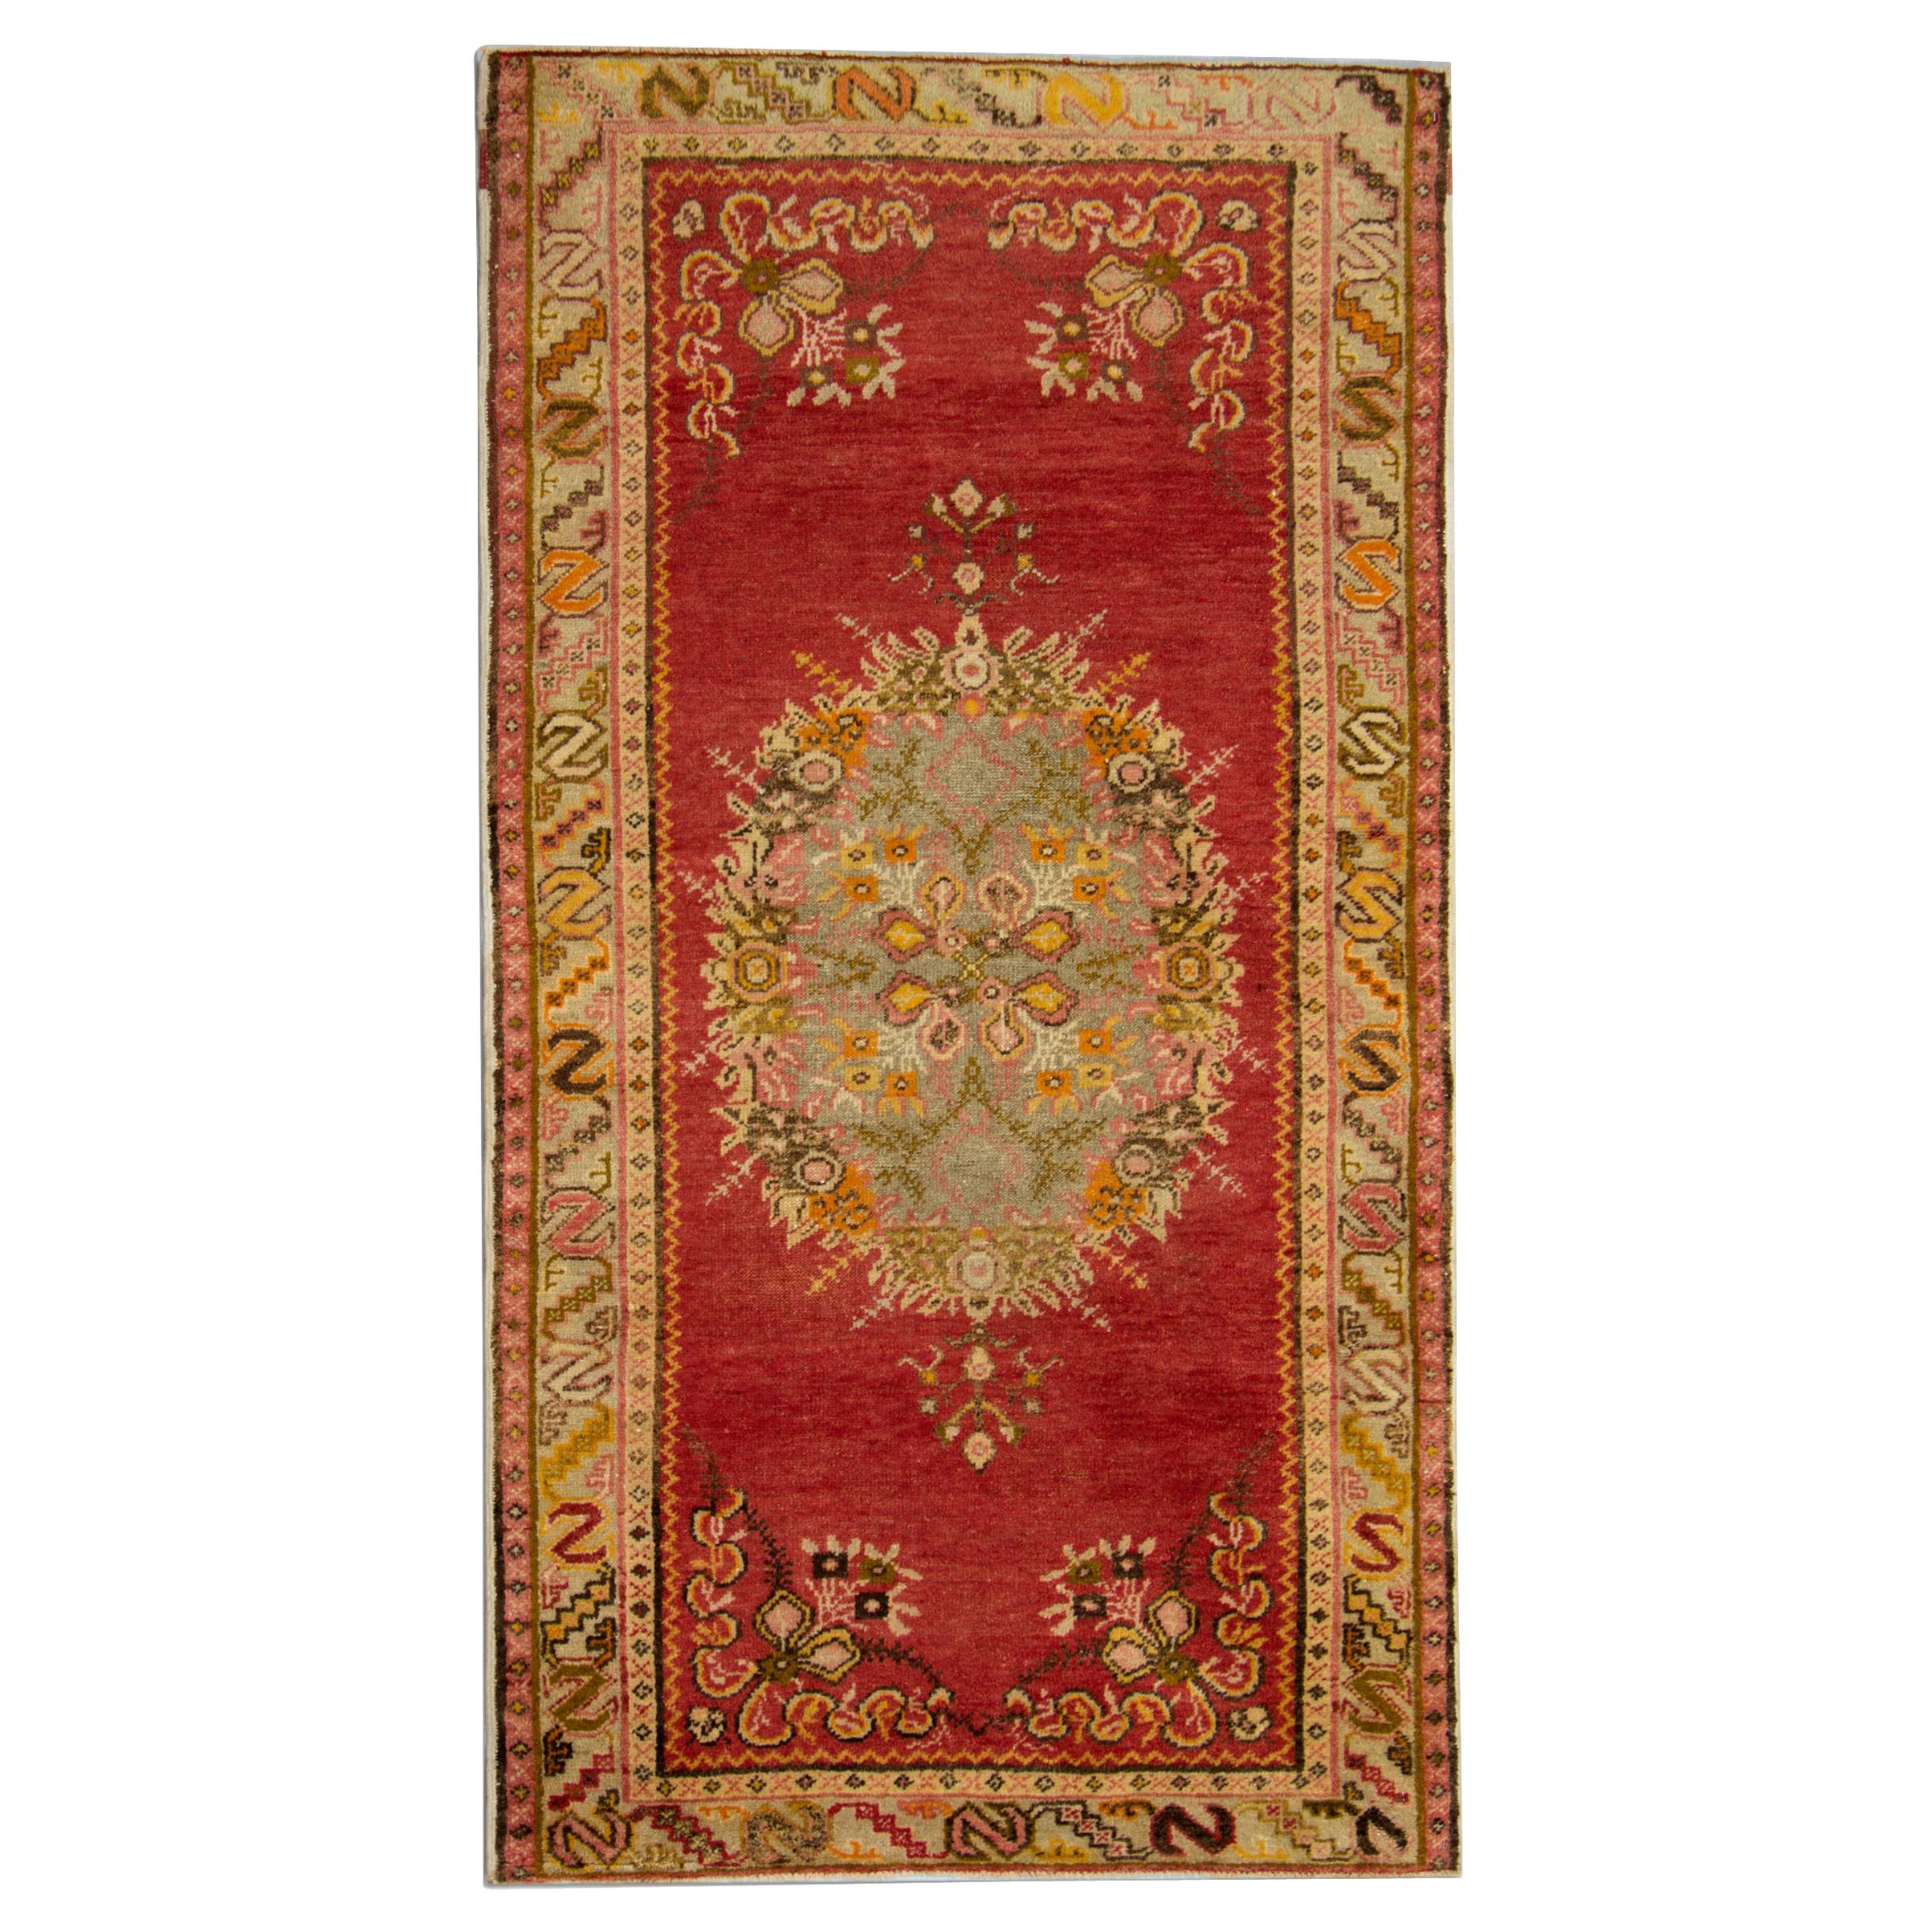 Handmade Carpet Antique Rugs, Turkish Rug, luxury Red Oriental Rugs for Sale